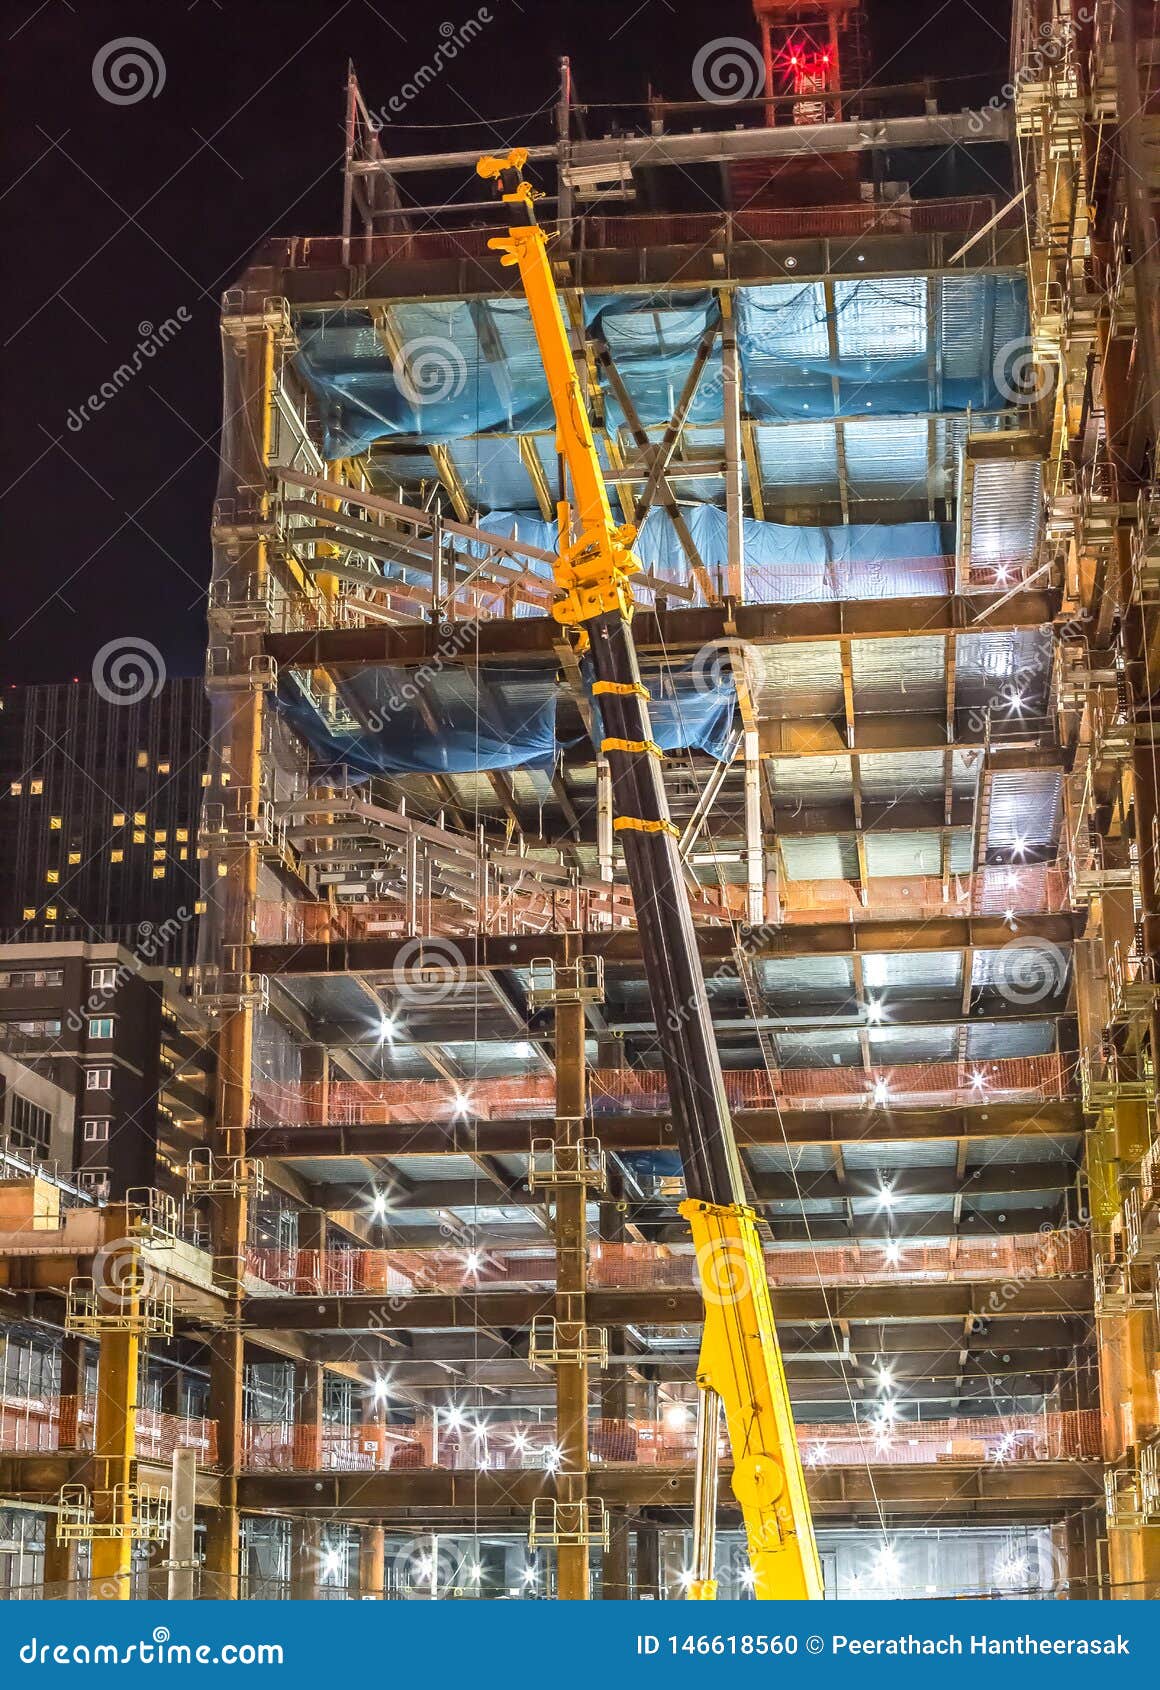 building construction site with crane at night time - sendai, miyagi, japan